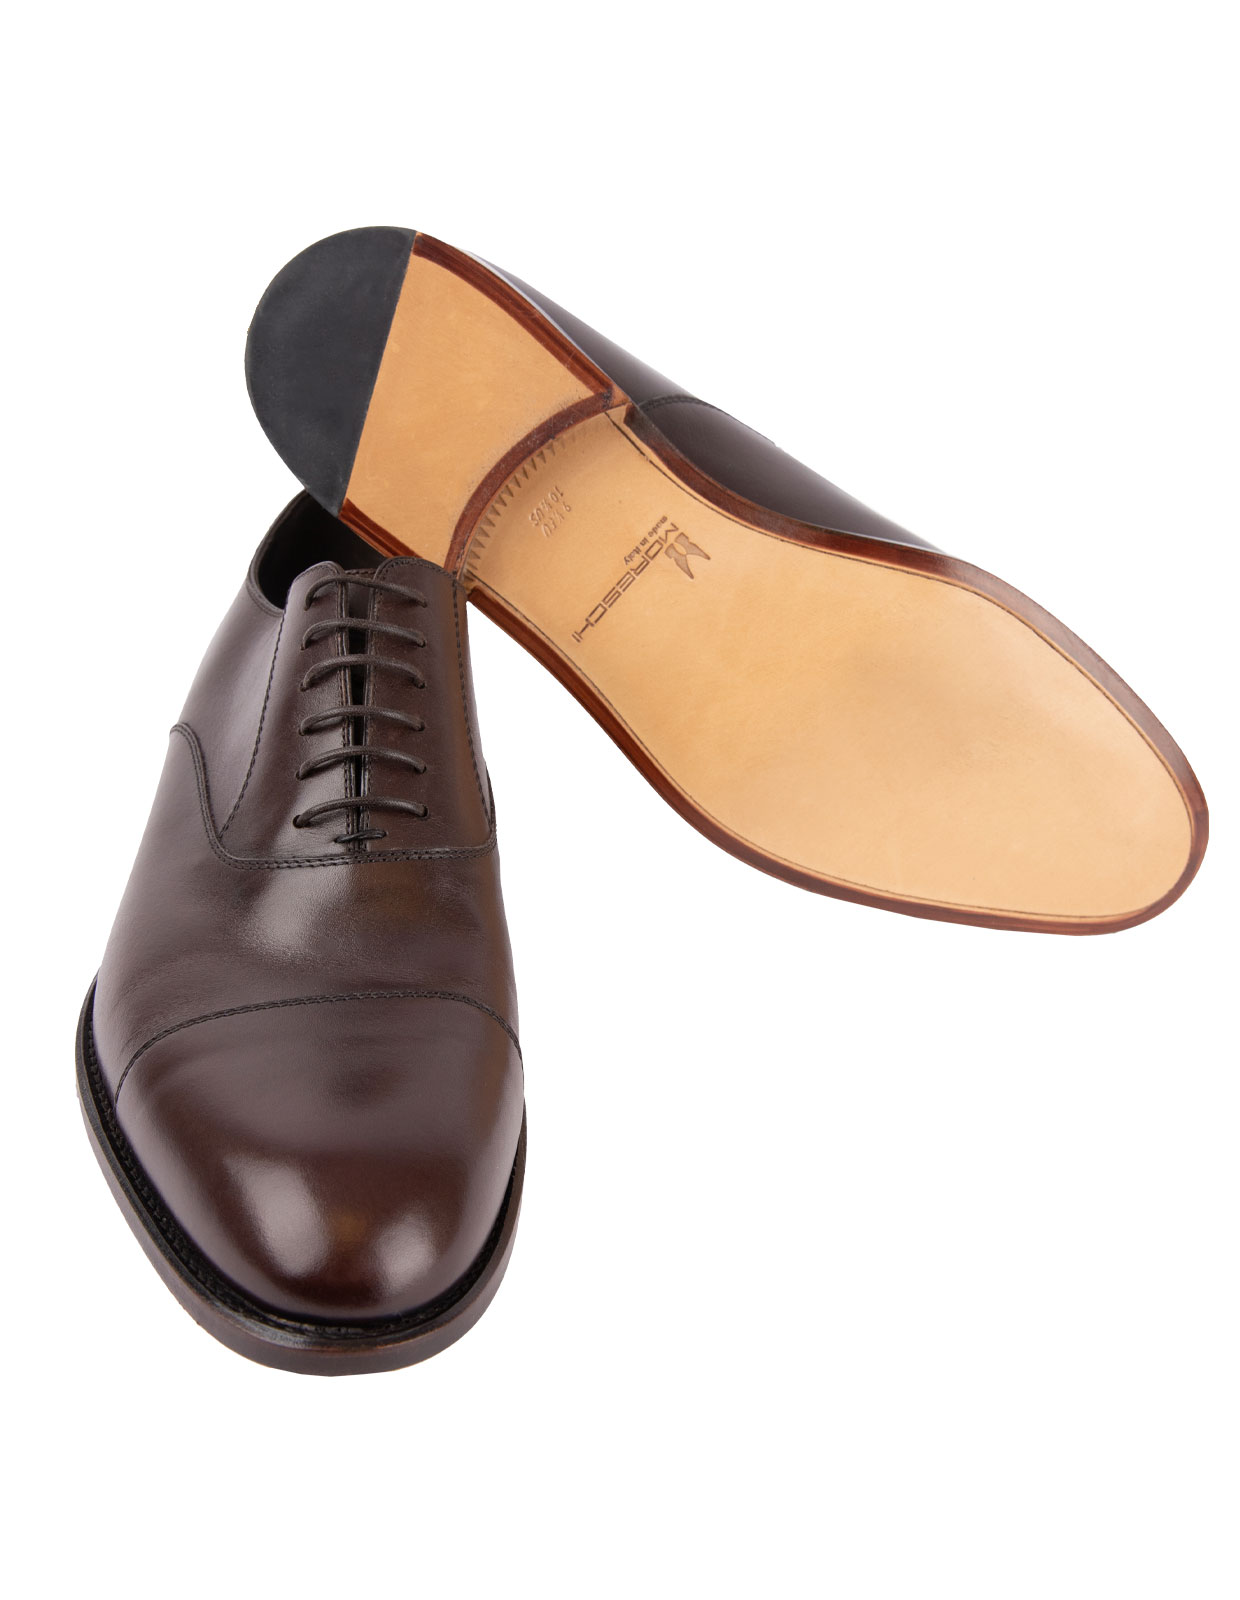 New York Oxford Shoes Calfskin Brown Stl 10